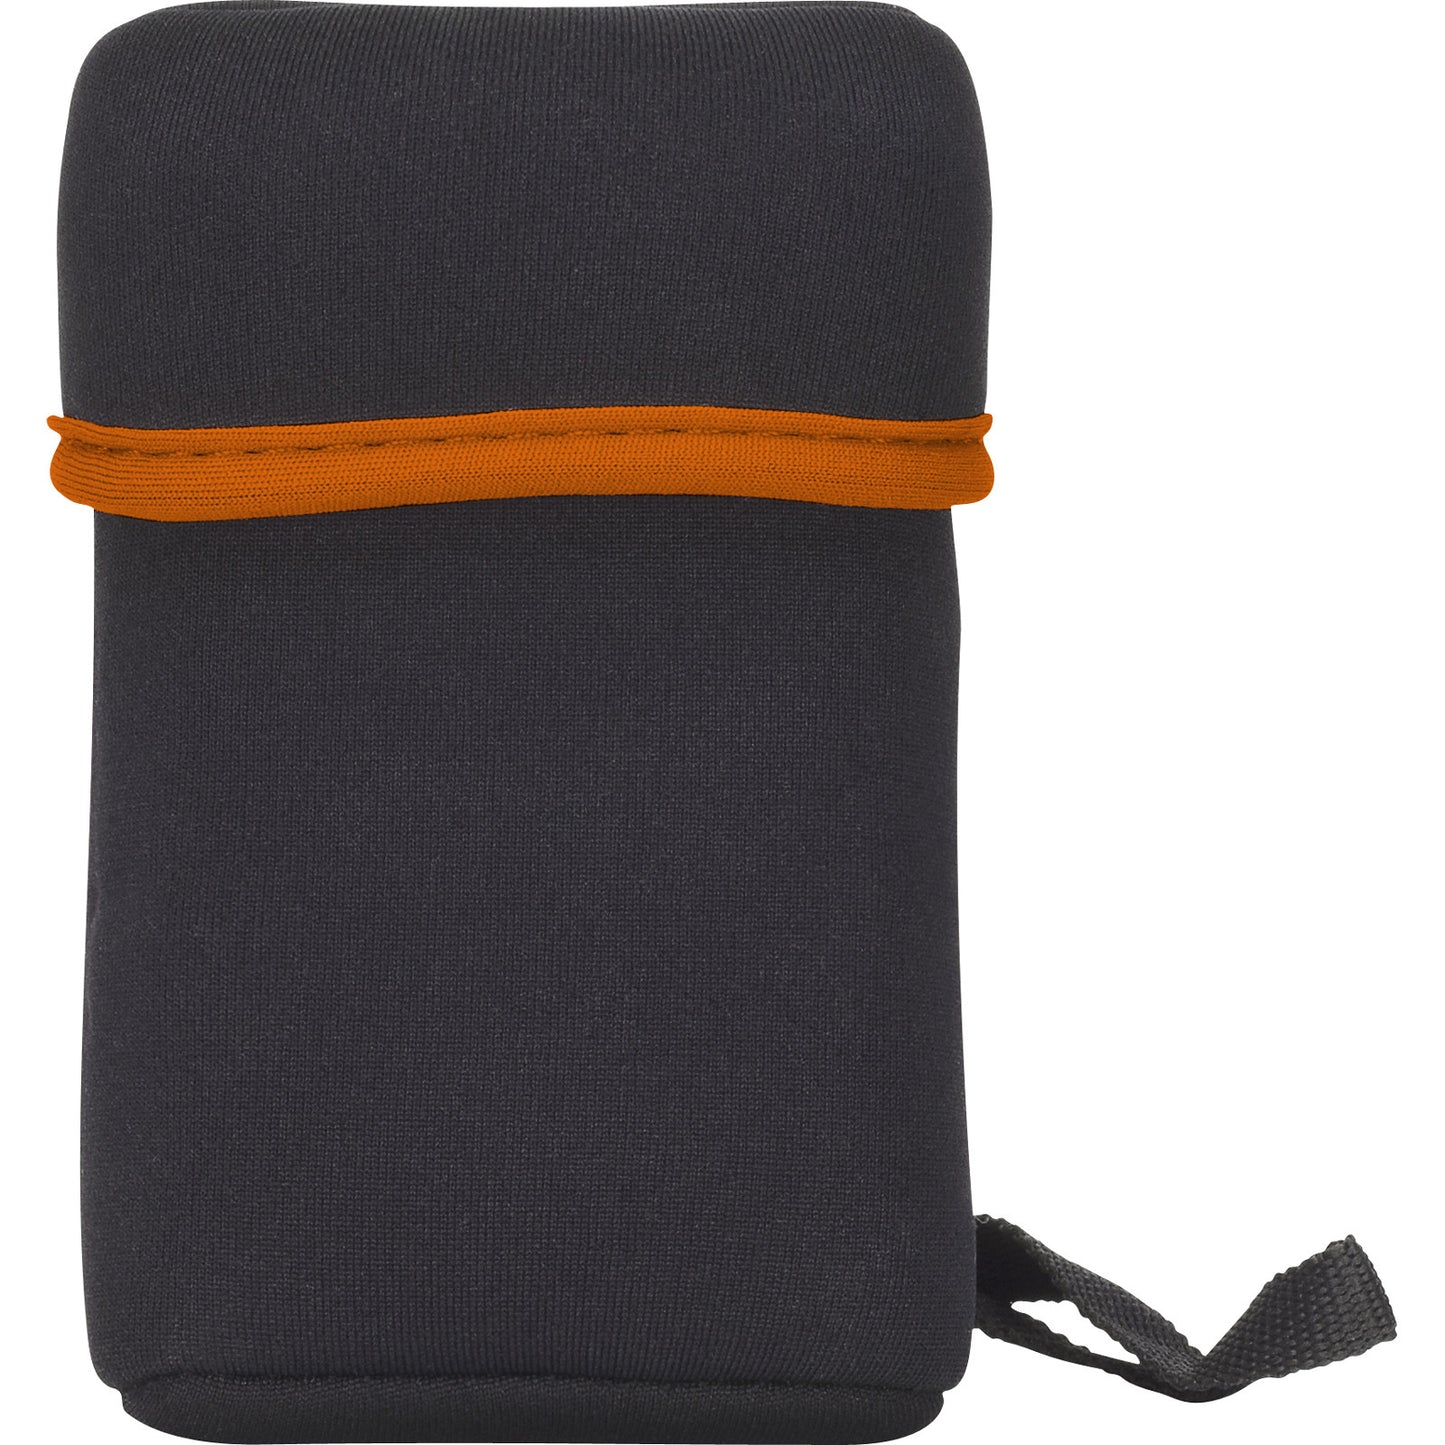 Olympus Carrying Case (Flap) for Camera - Black, Orange